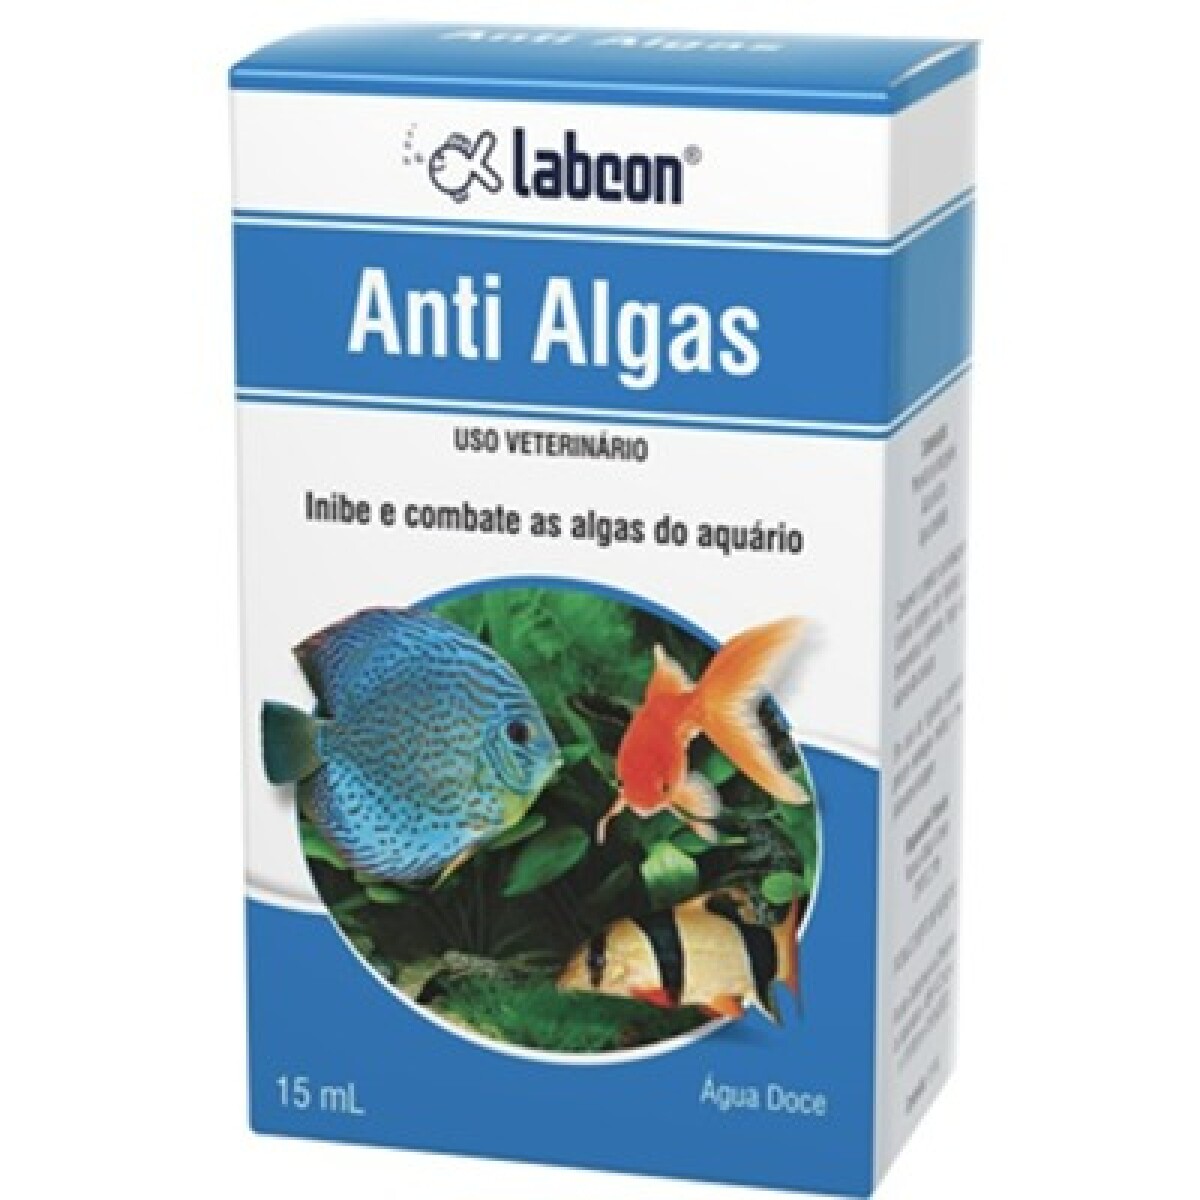 ANTIALGAS ALCON 15 ML - Unica 